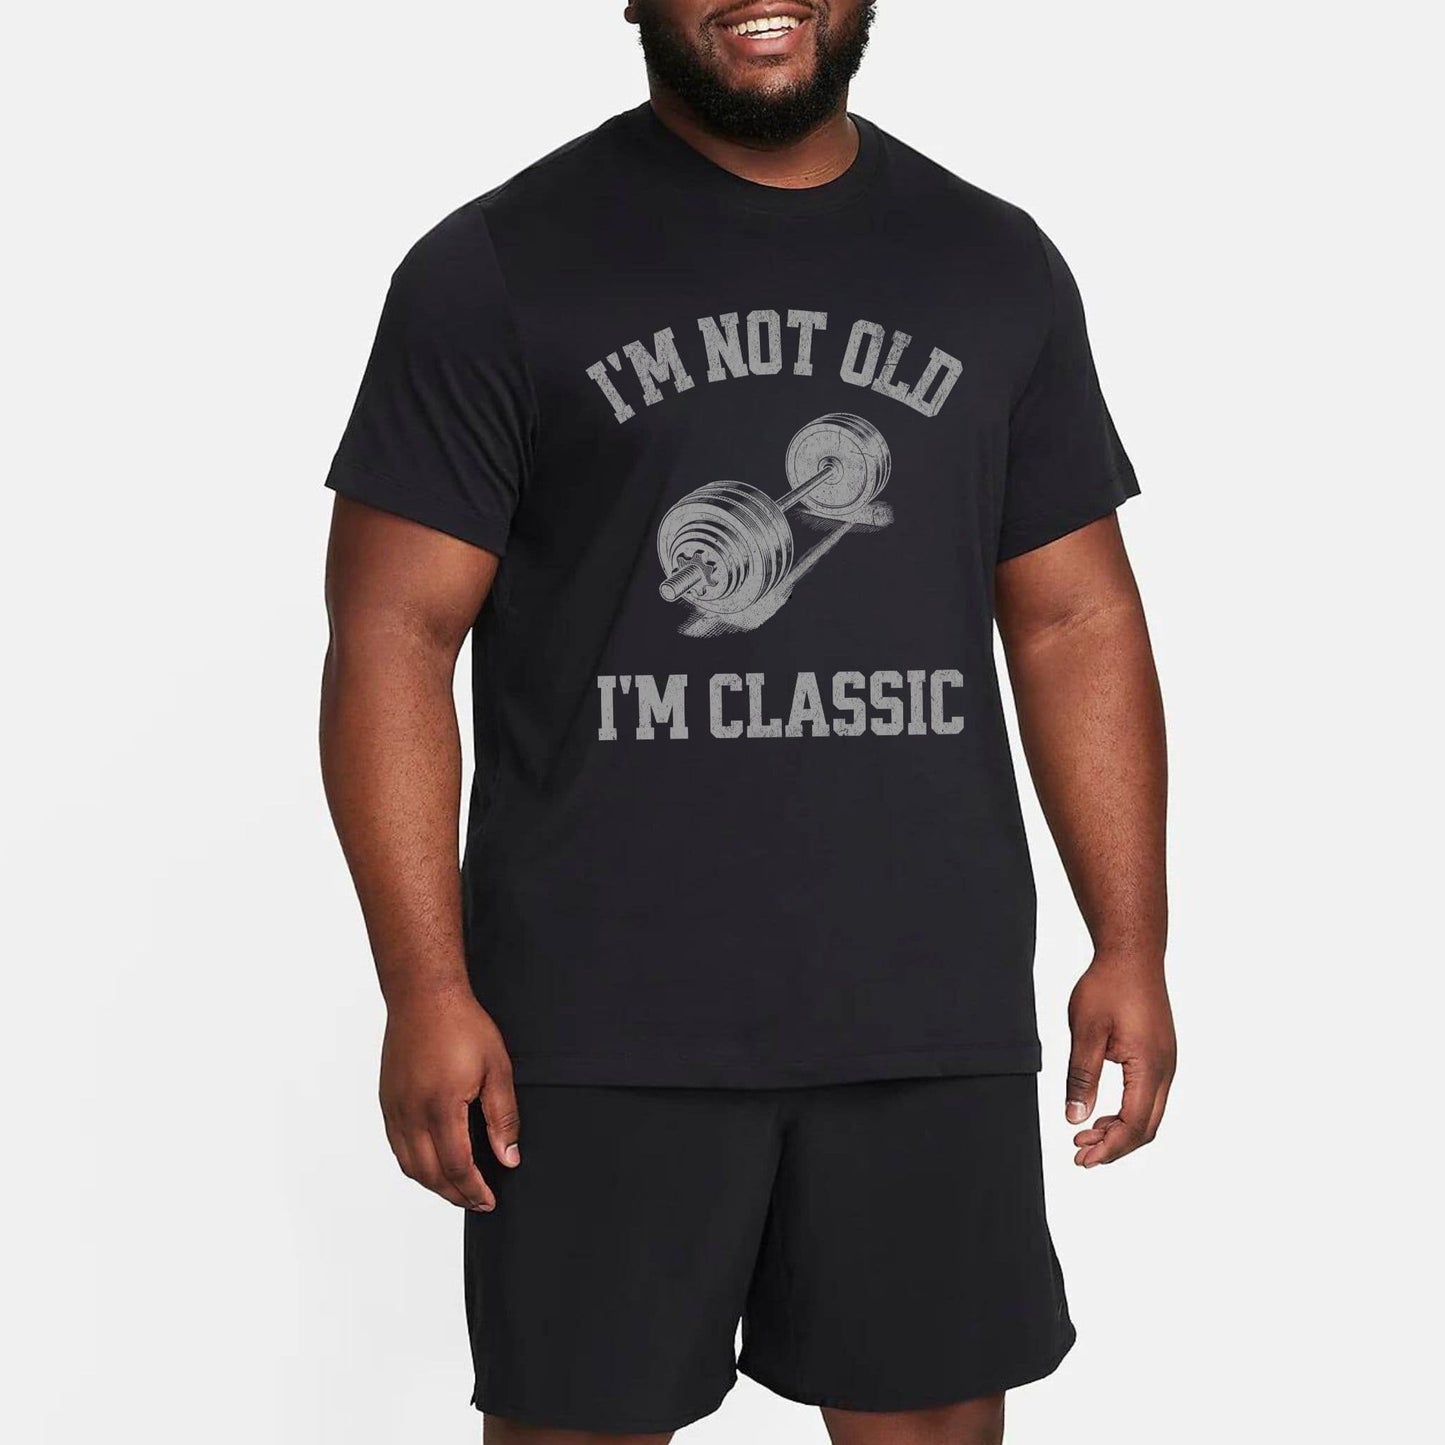 I'm Not Old I'm Classic T-Shirt - Apocalypse Club